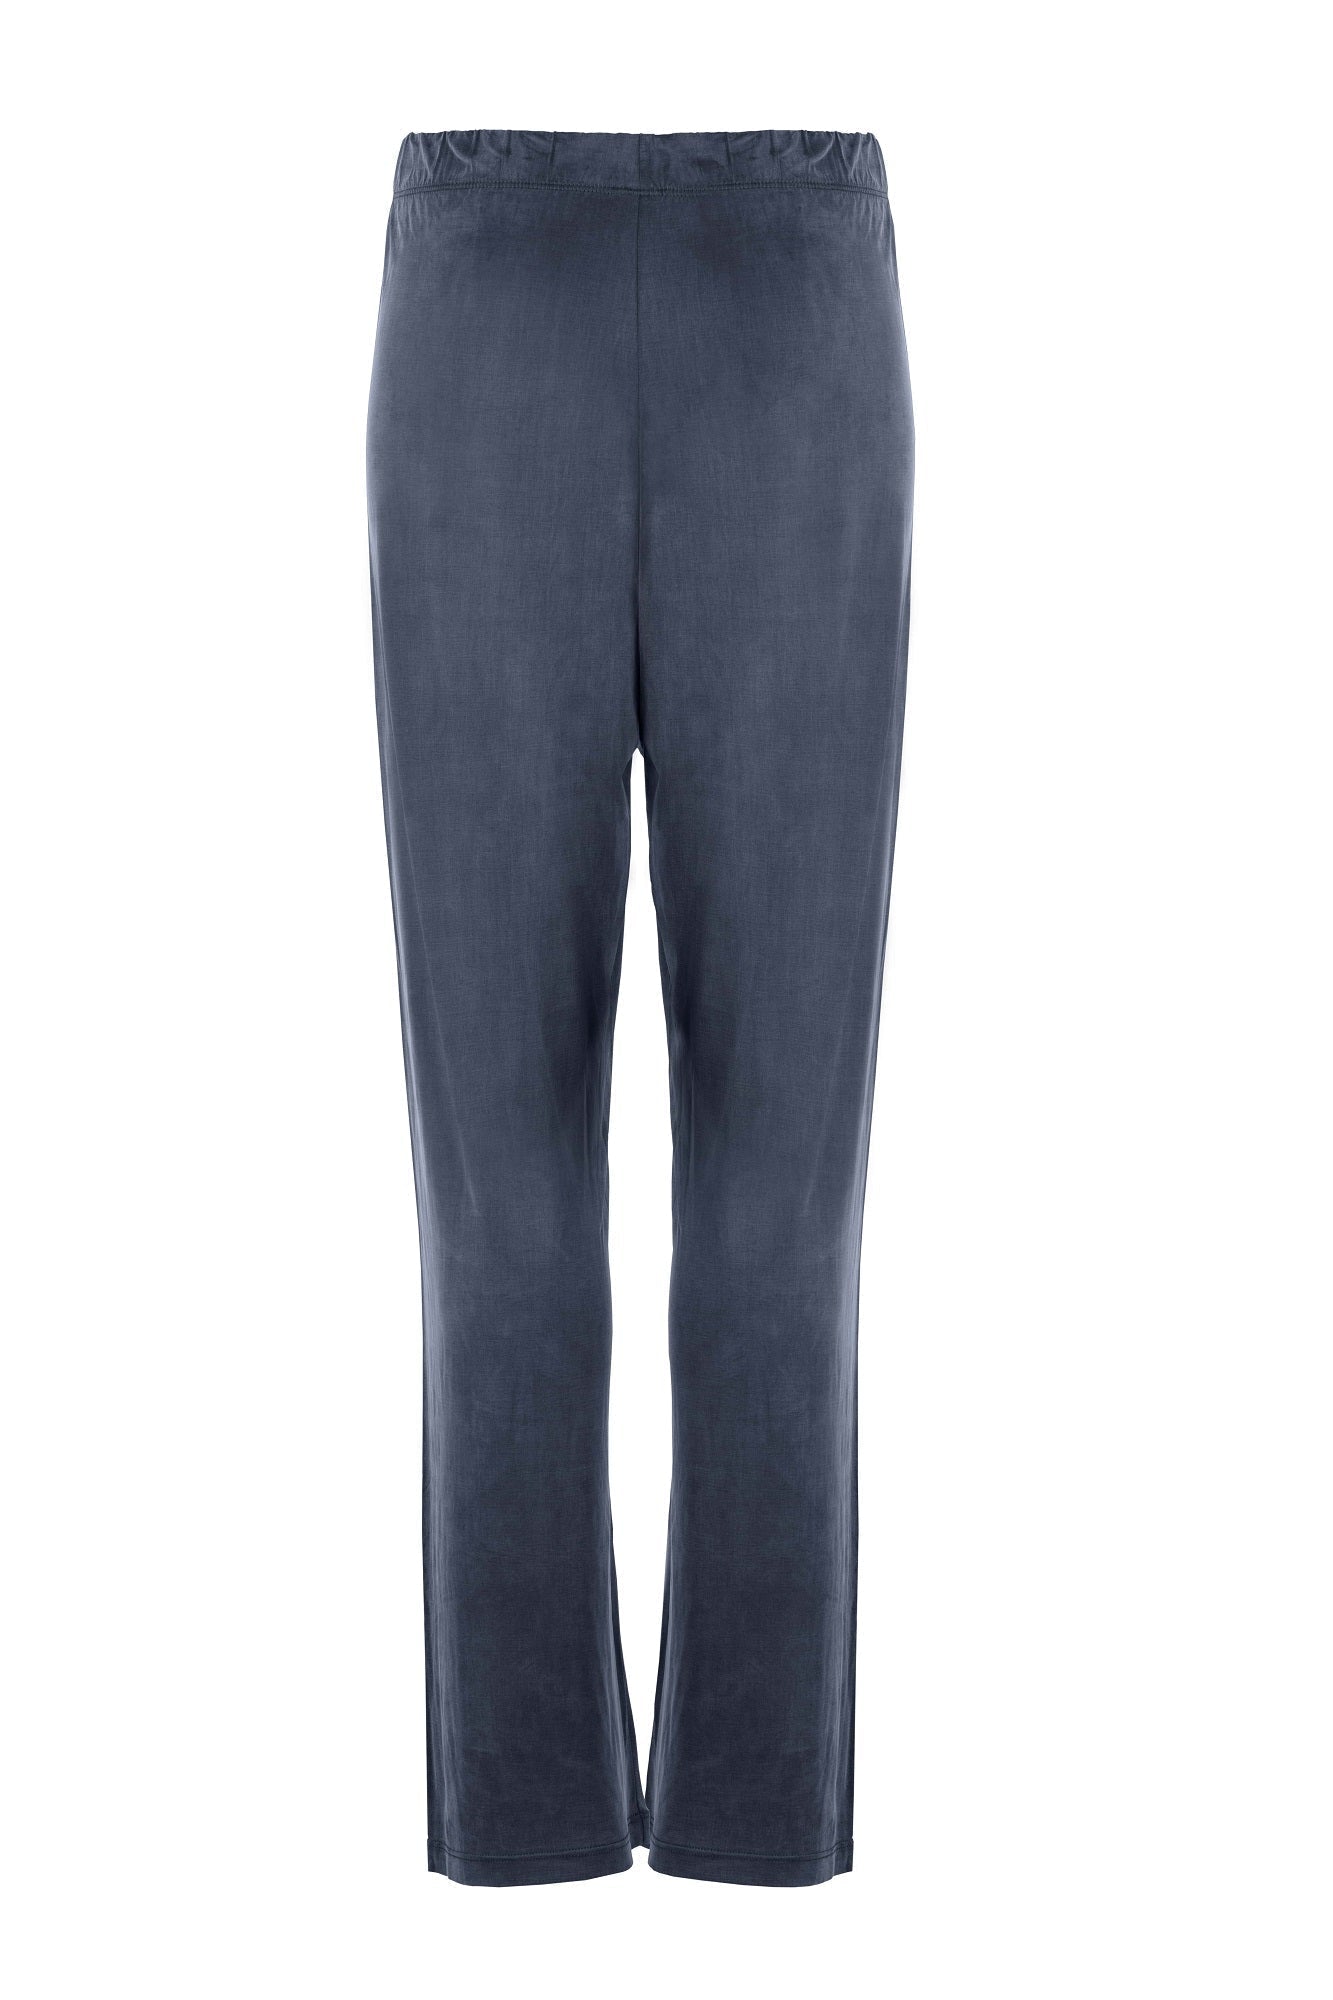 Pantalon taille haute bleu foncé en cupro par MOYA KALA